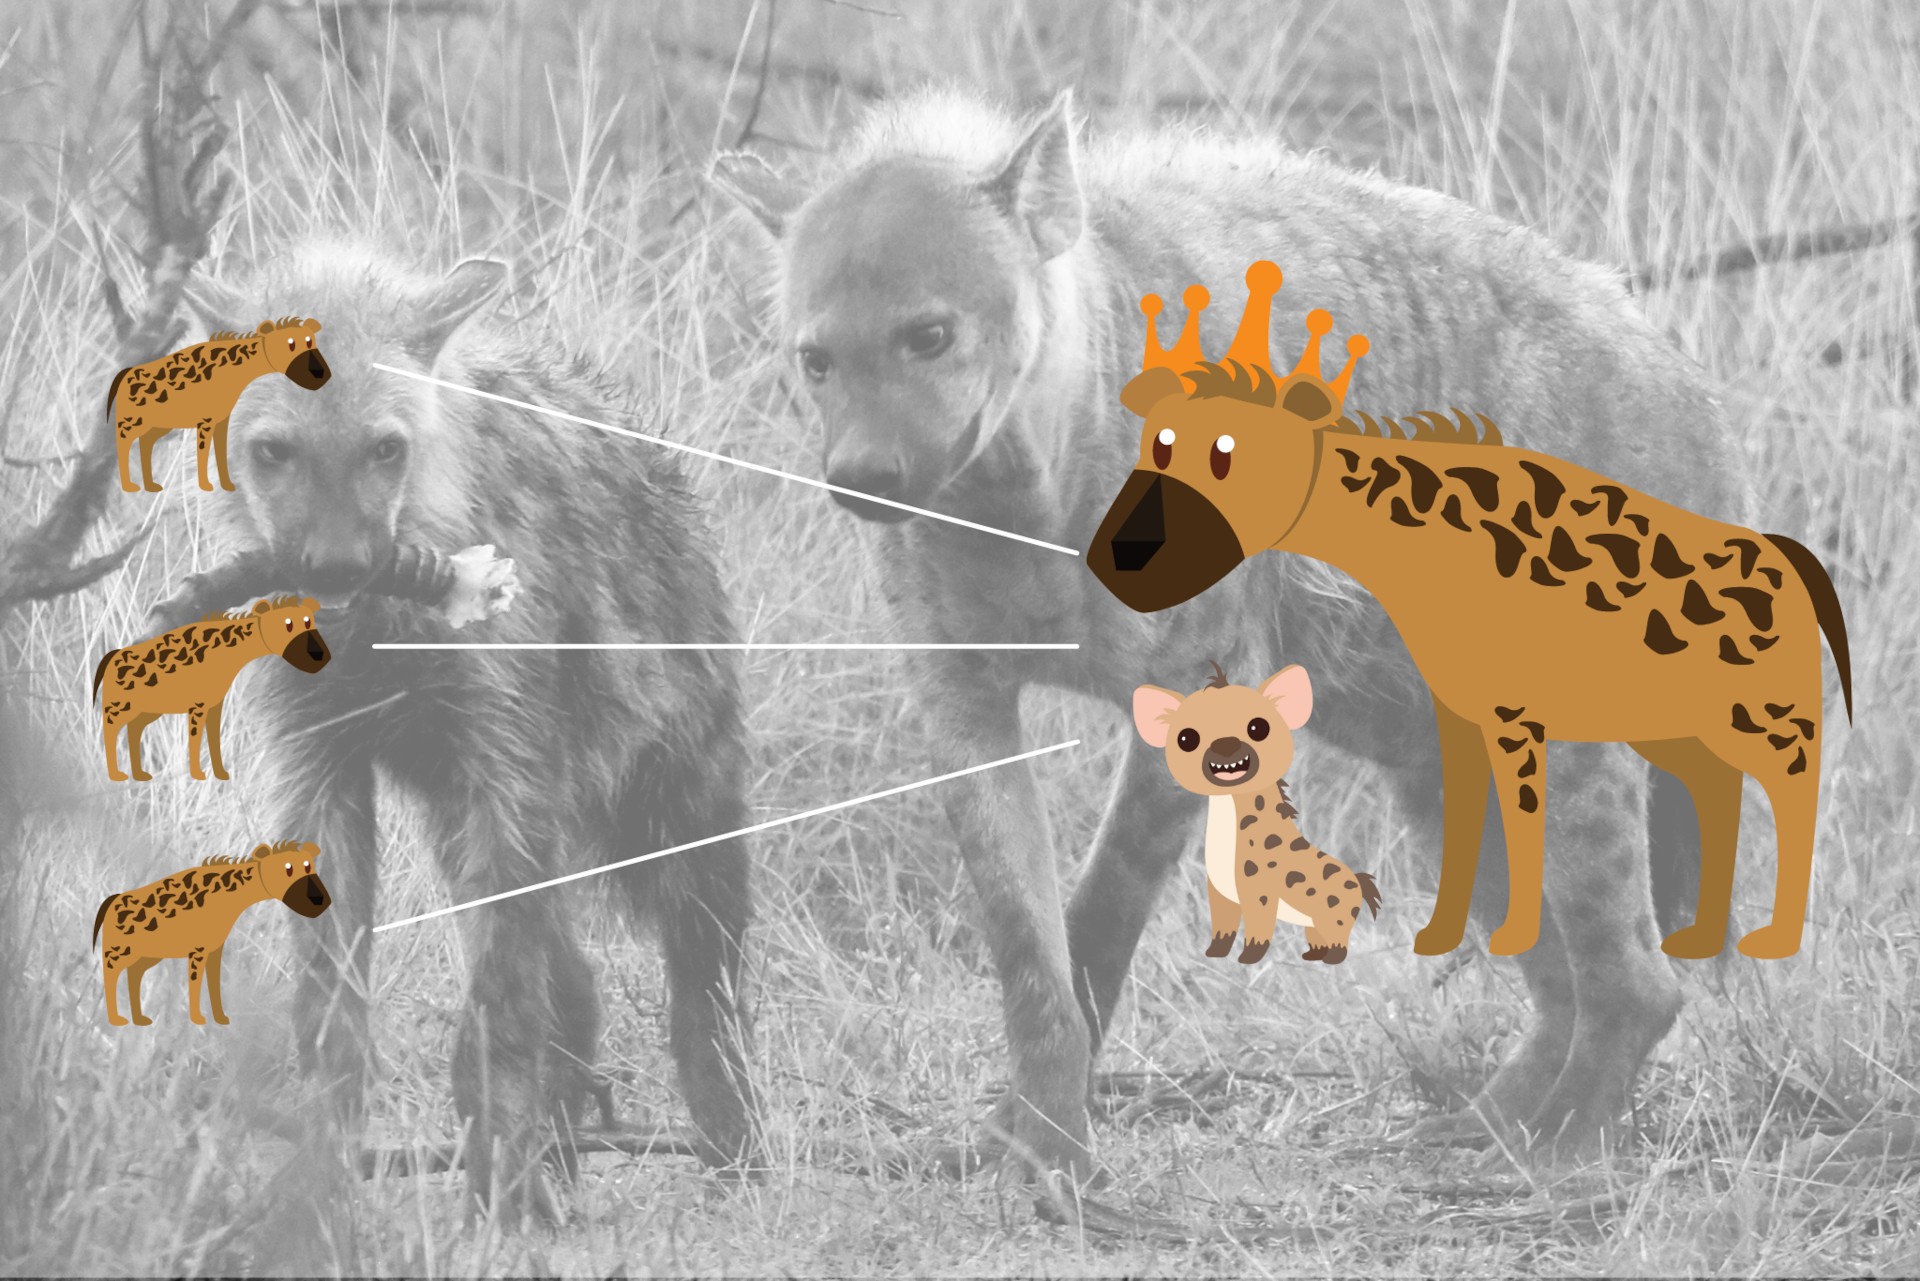 Alta società - la iena maculata eredita le reti sociali